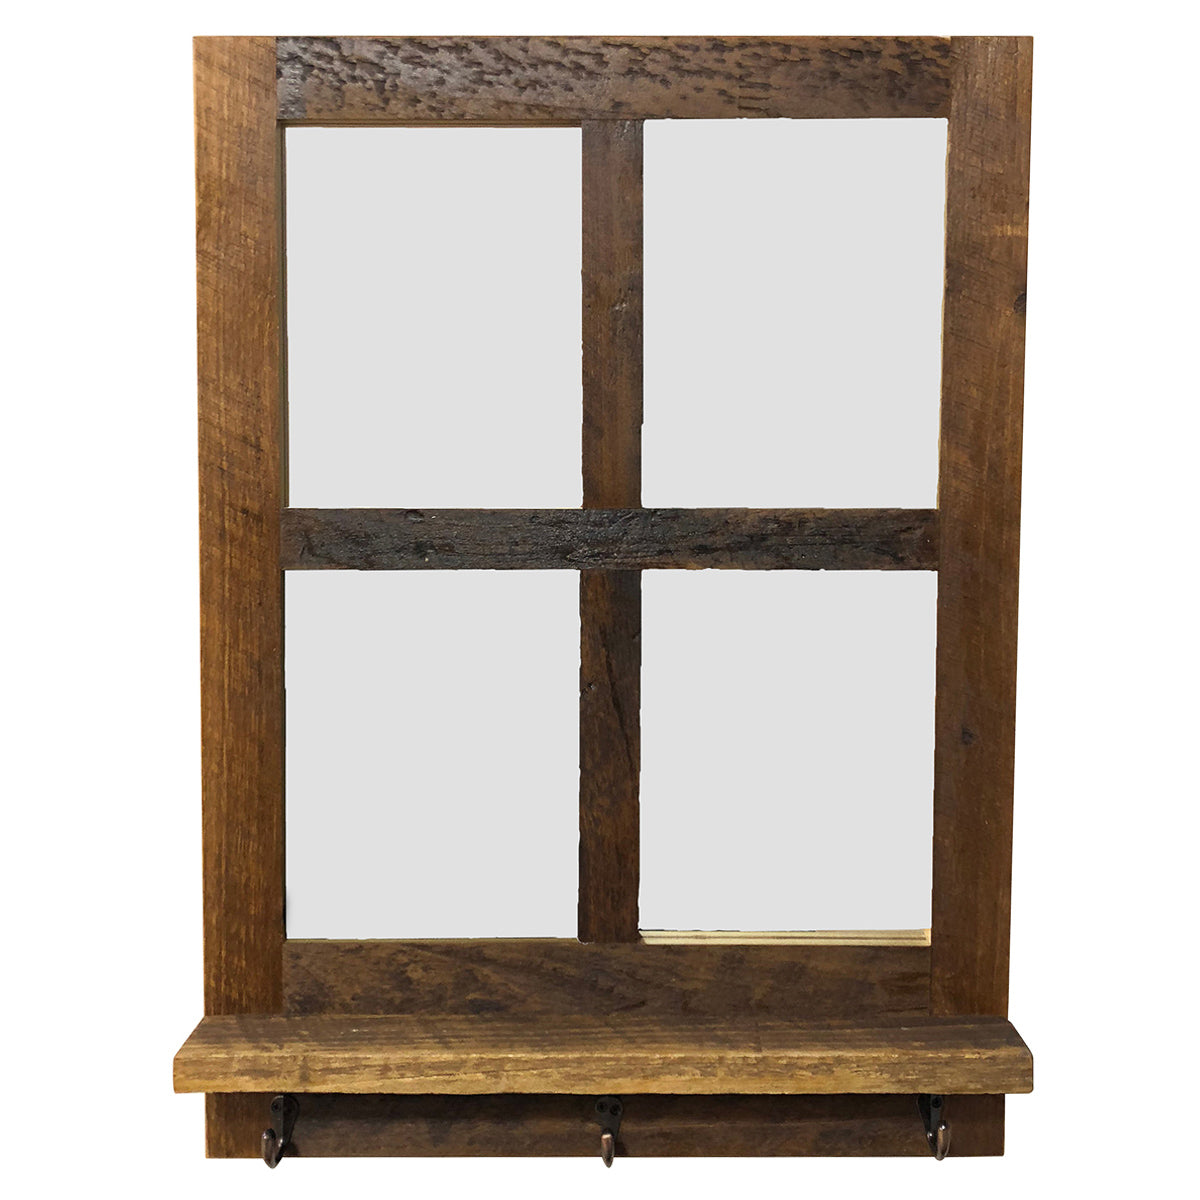 Reclaimed Wood 4 Pane Mirror Shelf with Hooks - Rustic Red Door Co.